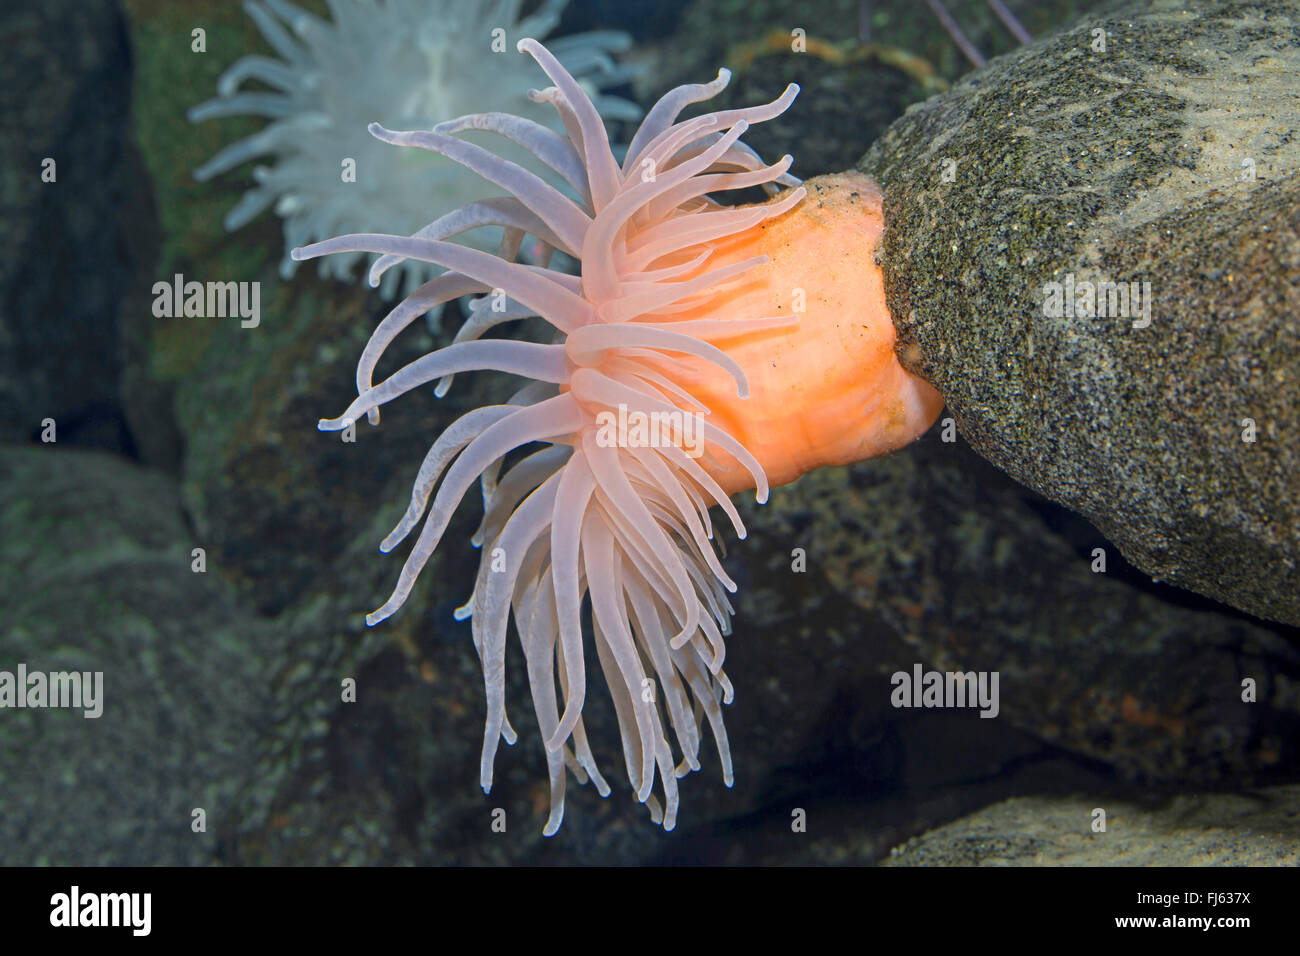 Deeplet sea anemone (Bolocera tuediae), on a stone Stock Photo